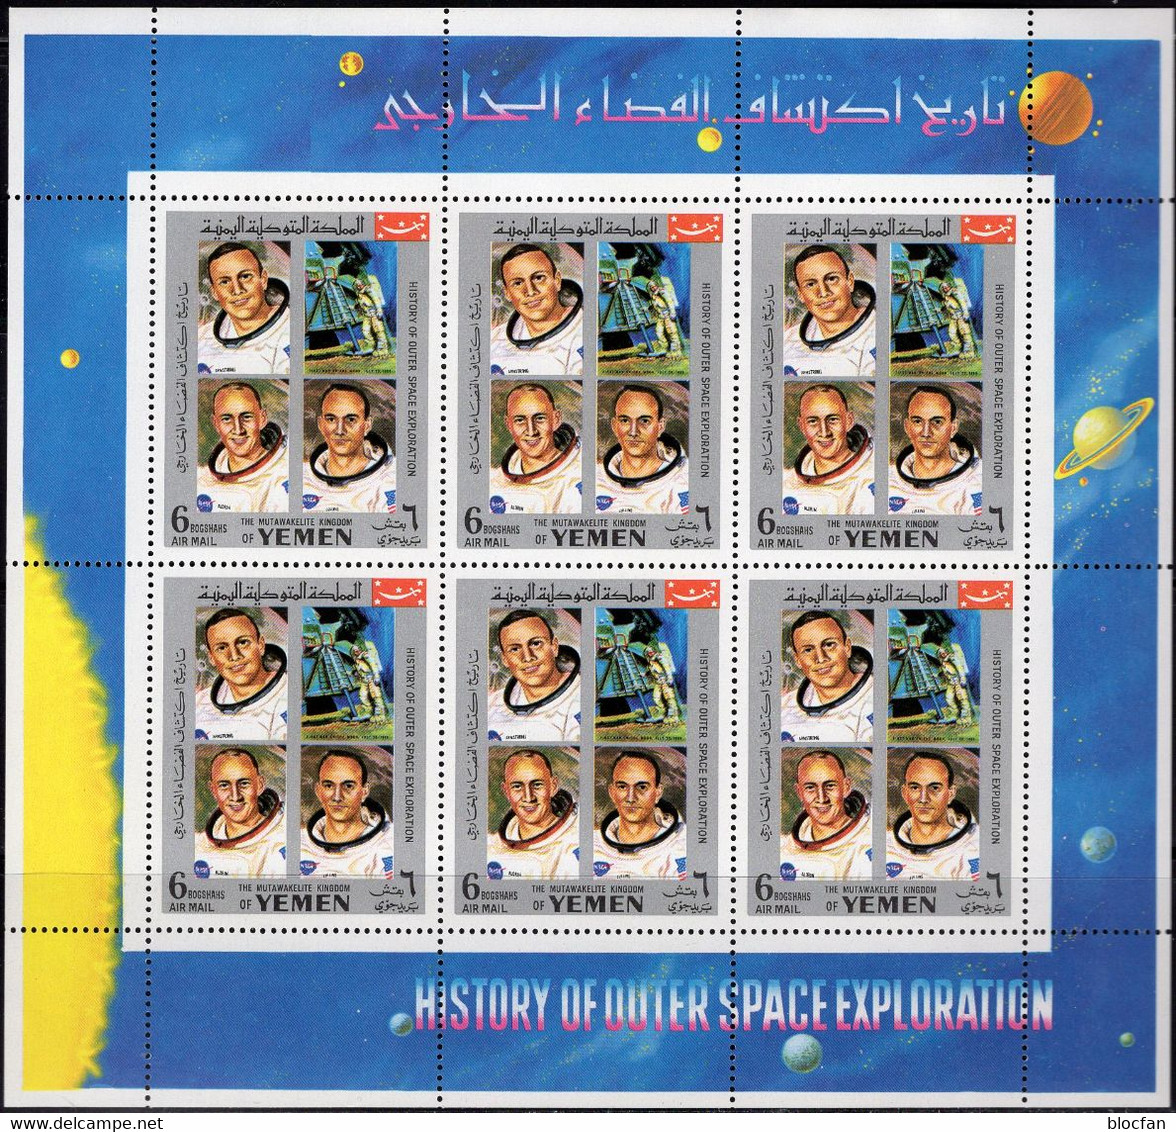 Apollo 1969 Jemen 883 Kleinbogen ** 6€ Mond-Landung Hoja M/s History Space Exploration Sheetlet Bloc Sheet Bf Yemen - USA